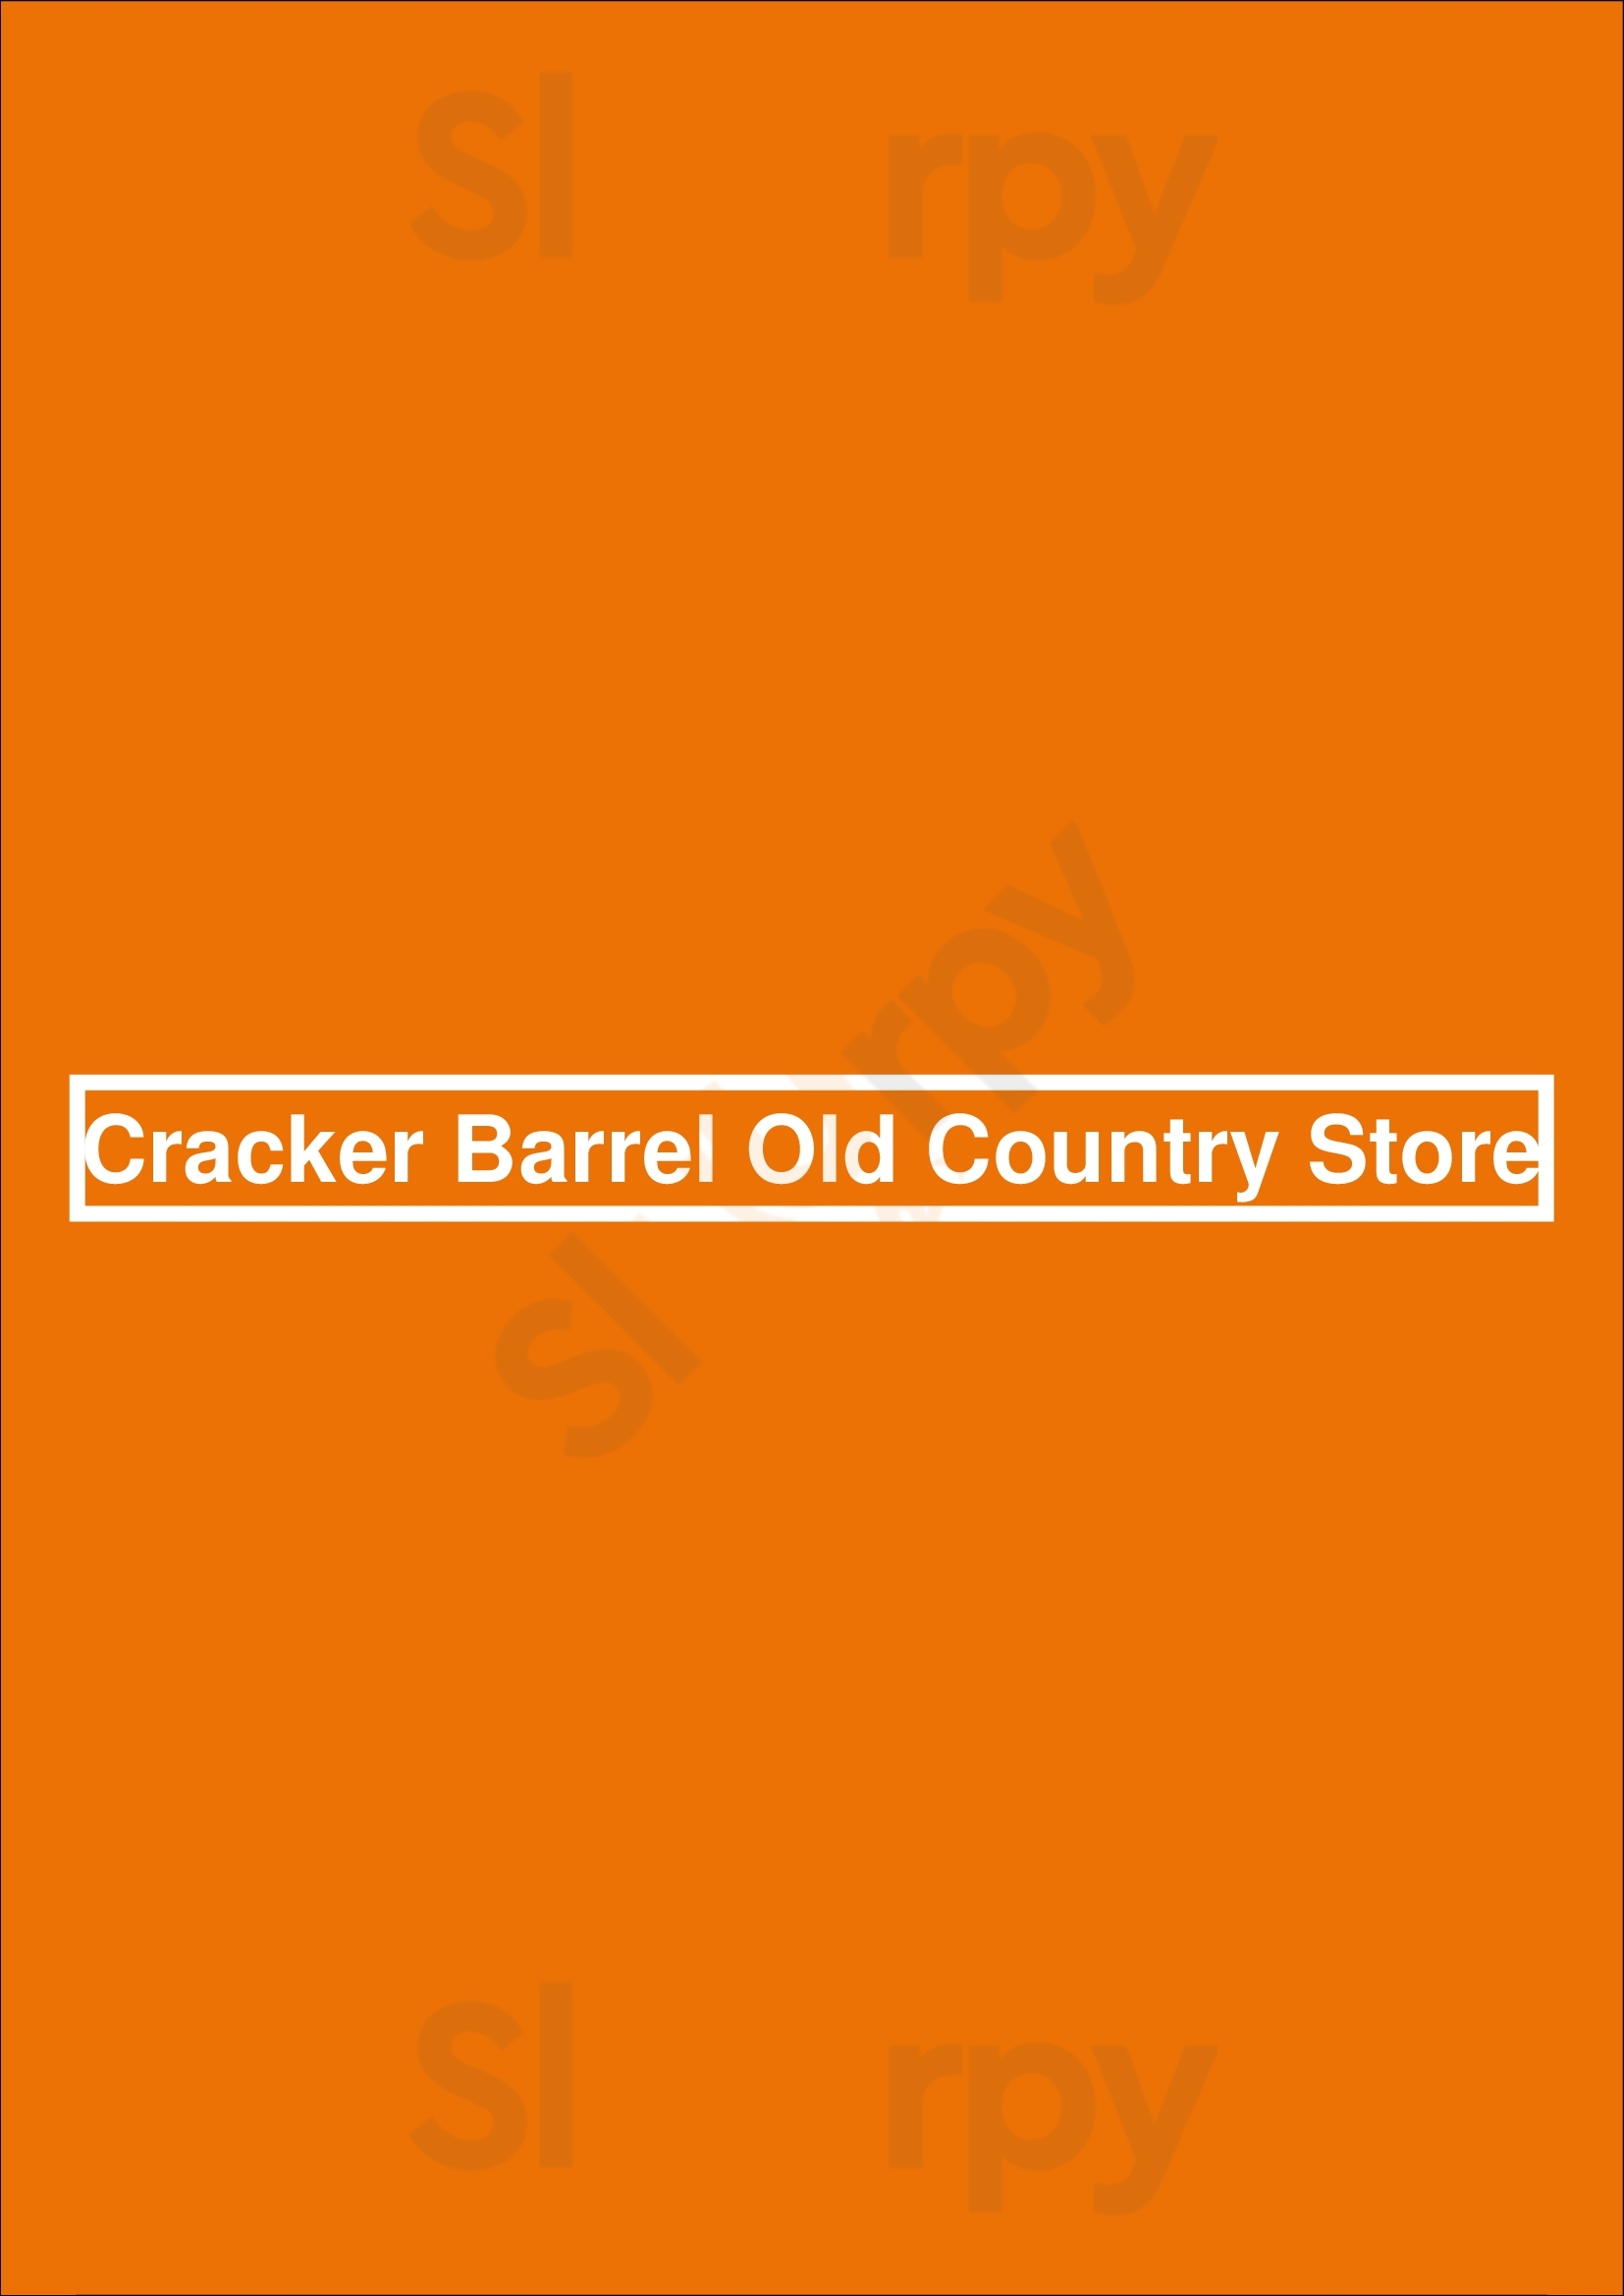 Cracker Barrel Old Country Store Sacramento Menu - 1